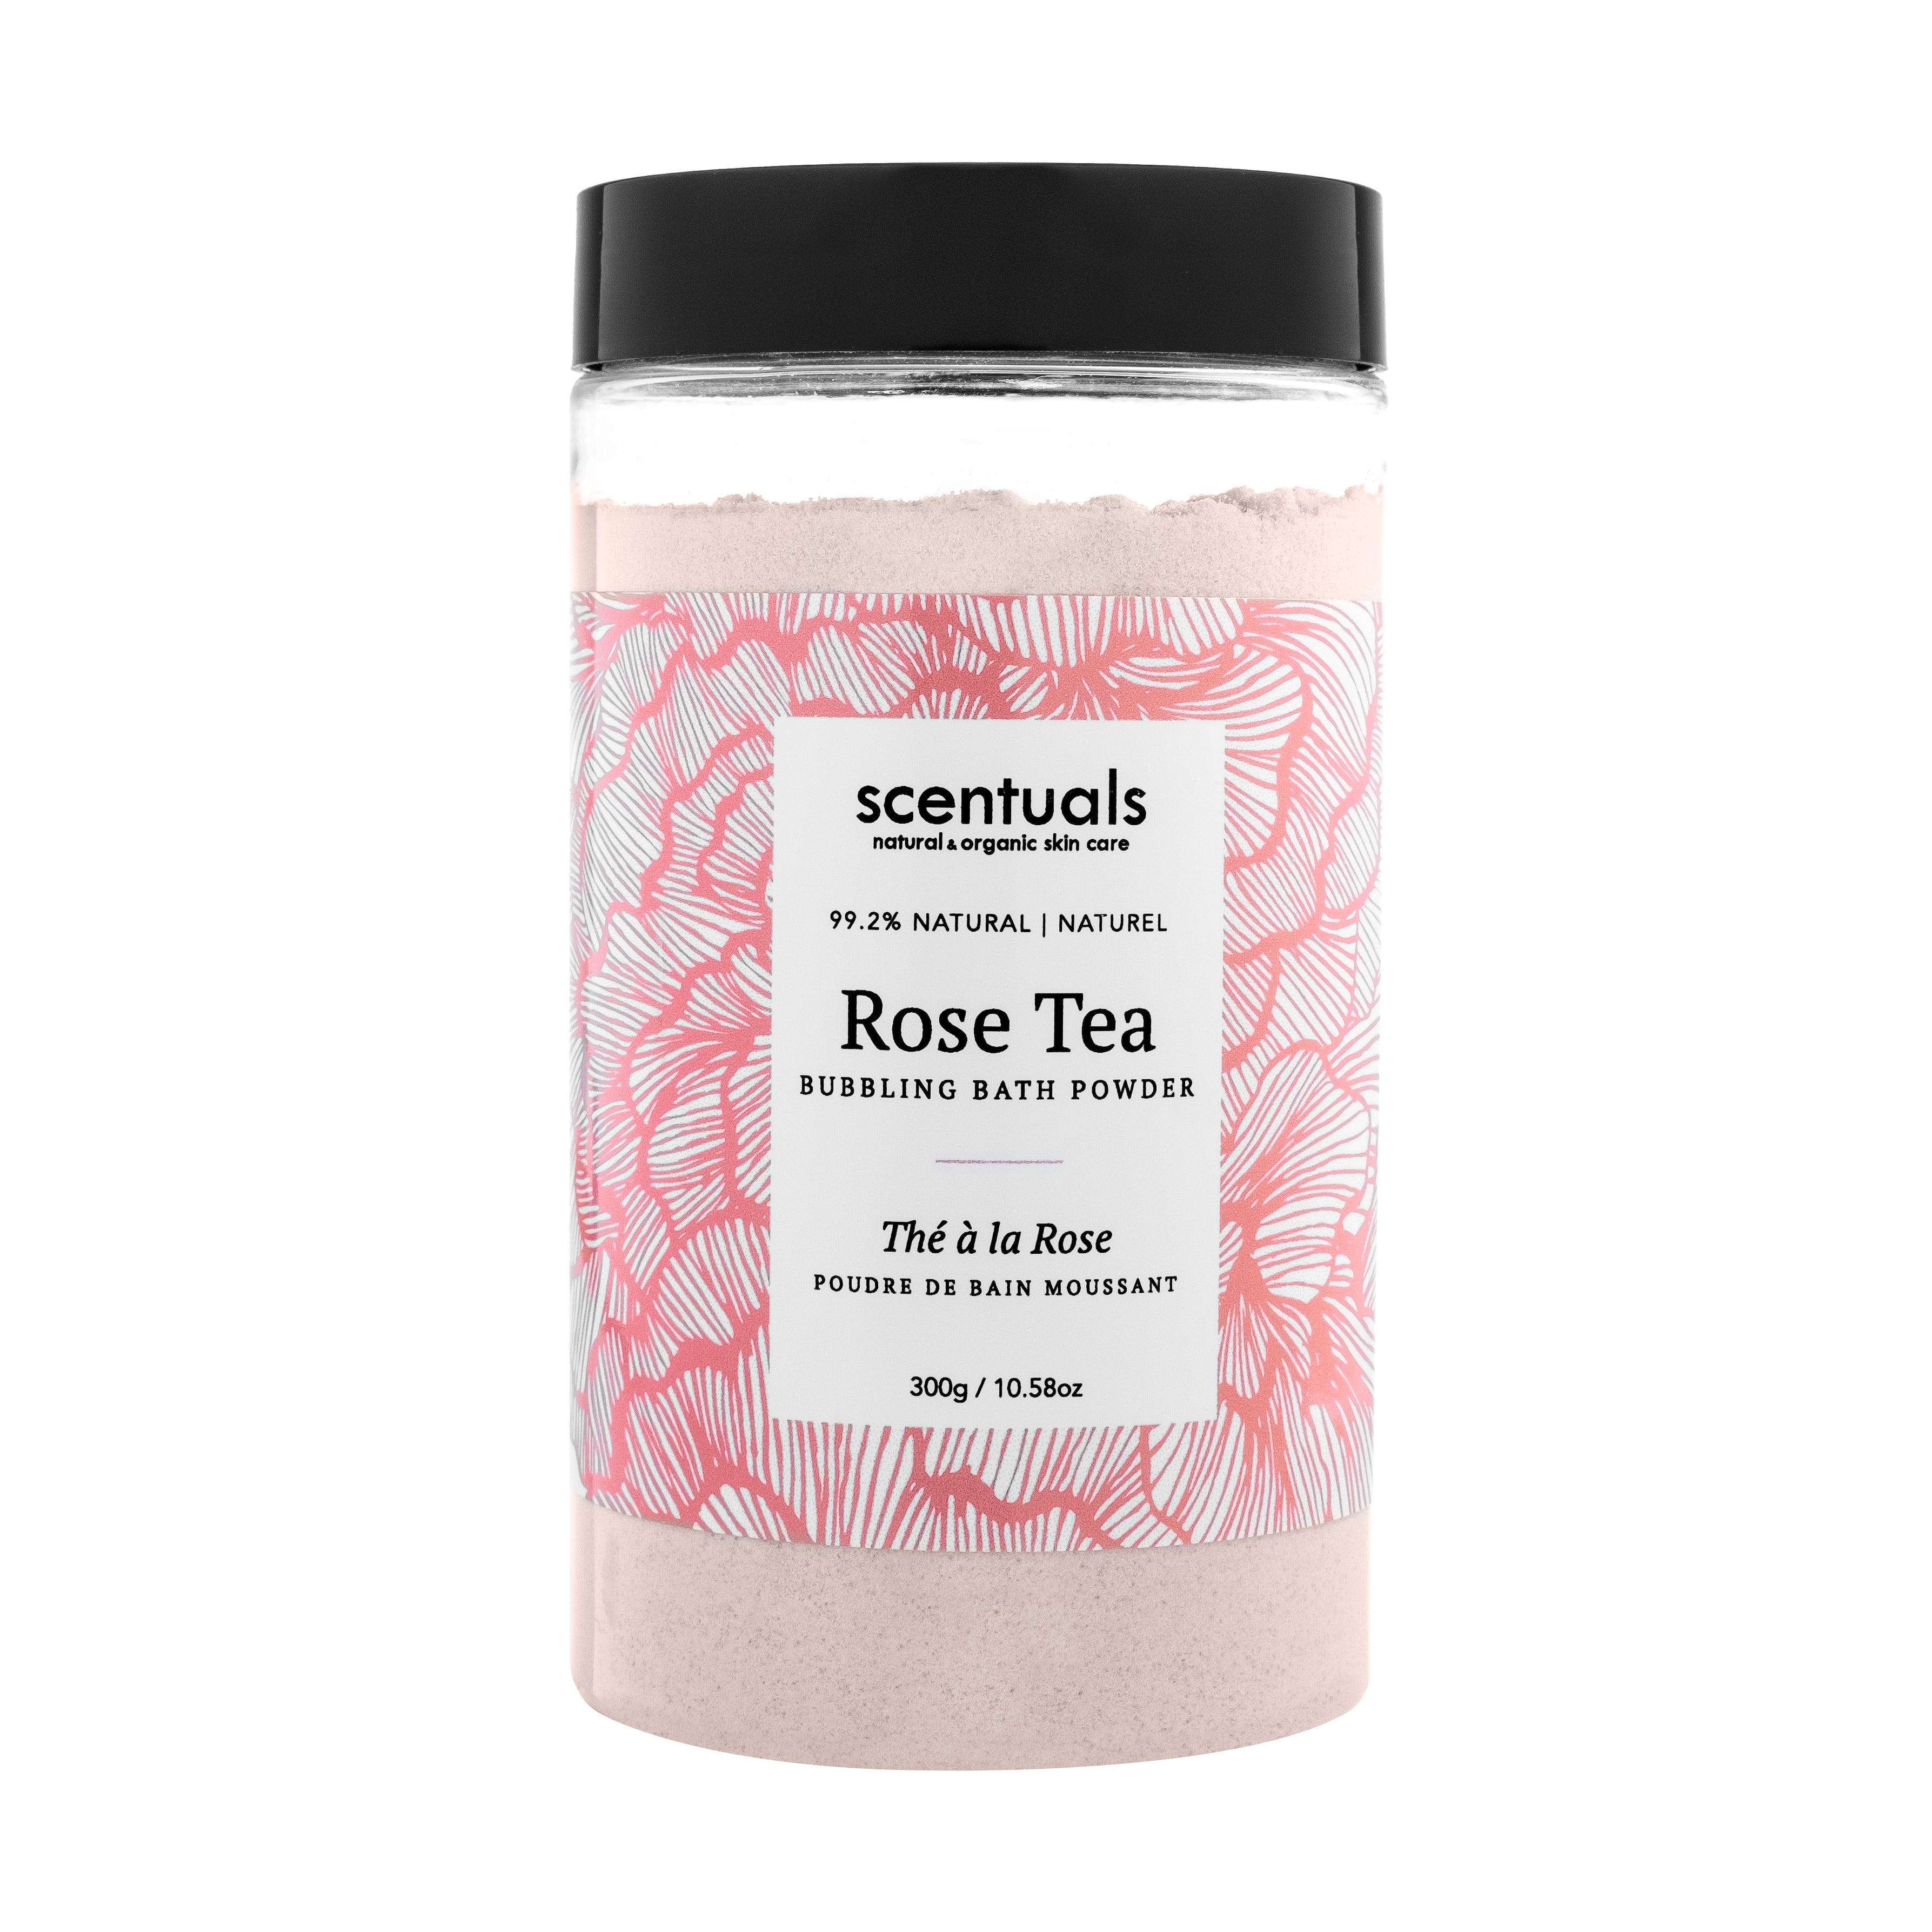 Rose Tea Bubble Bath Powder